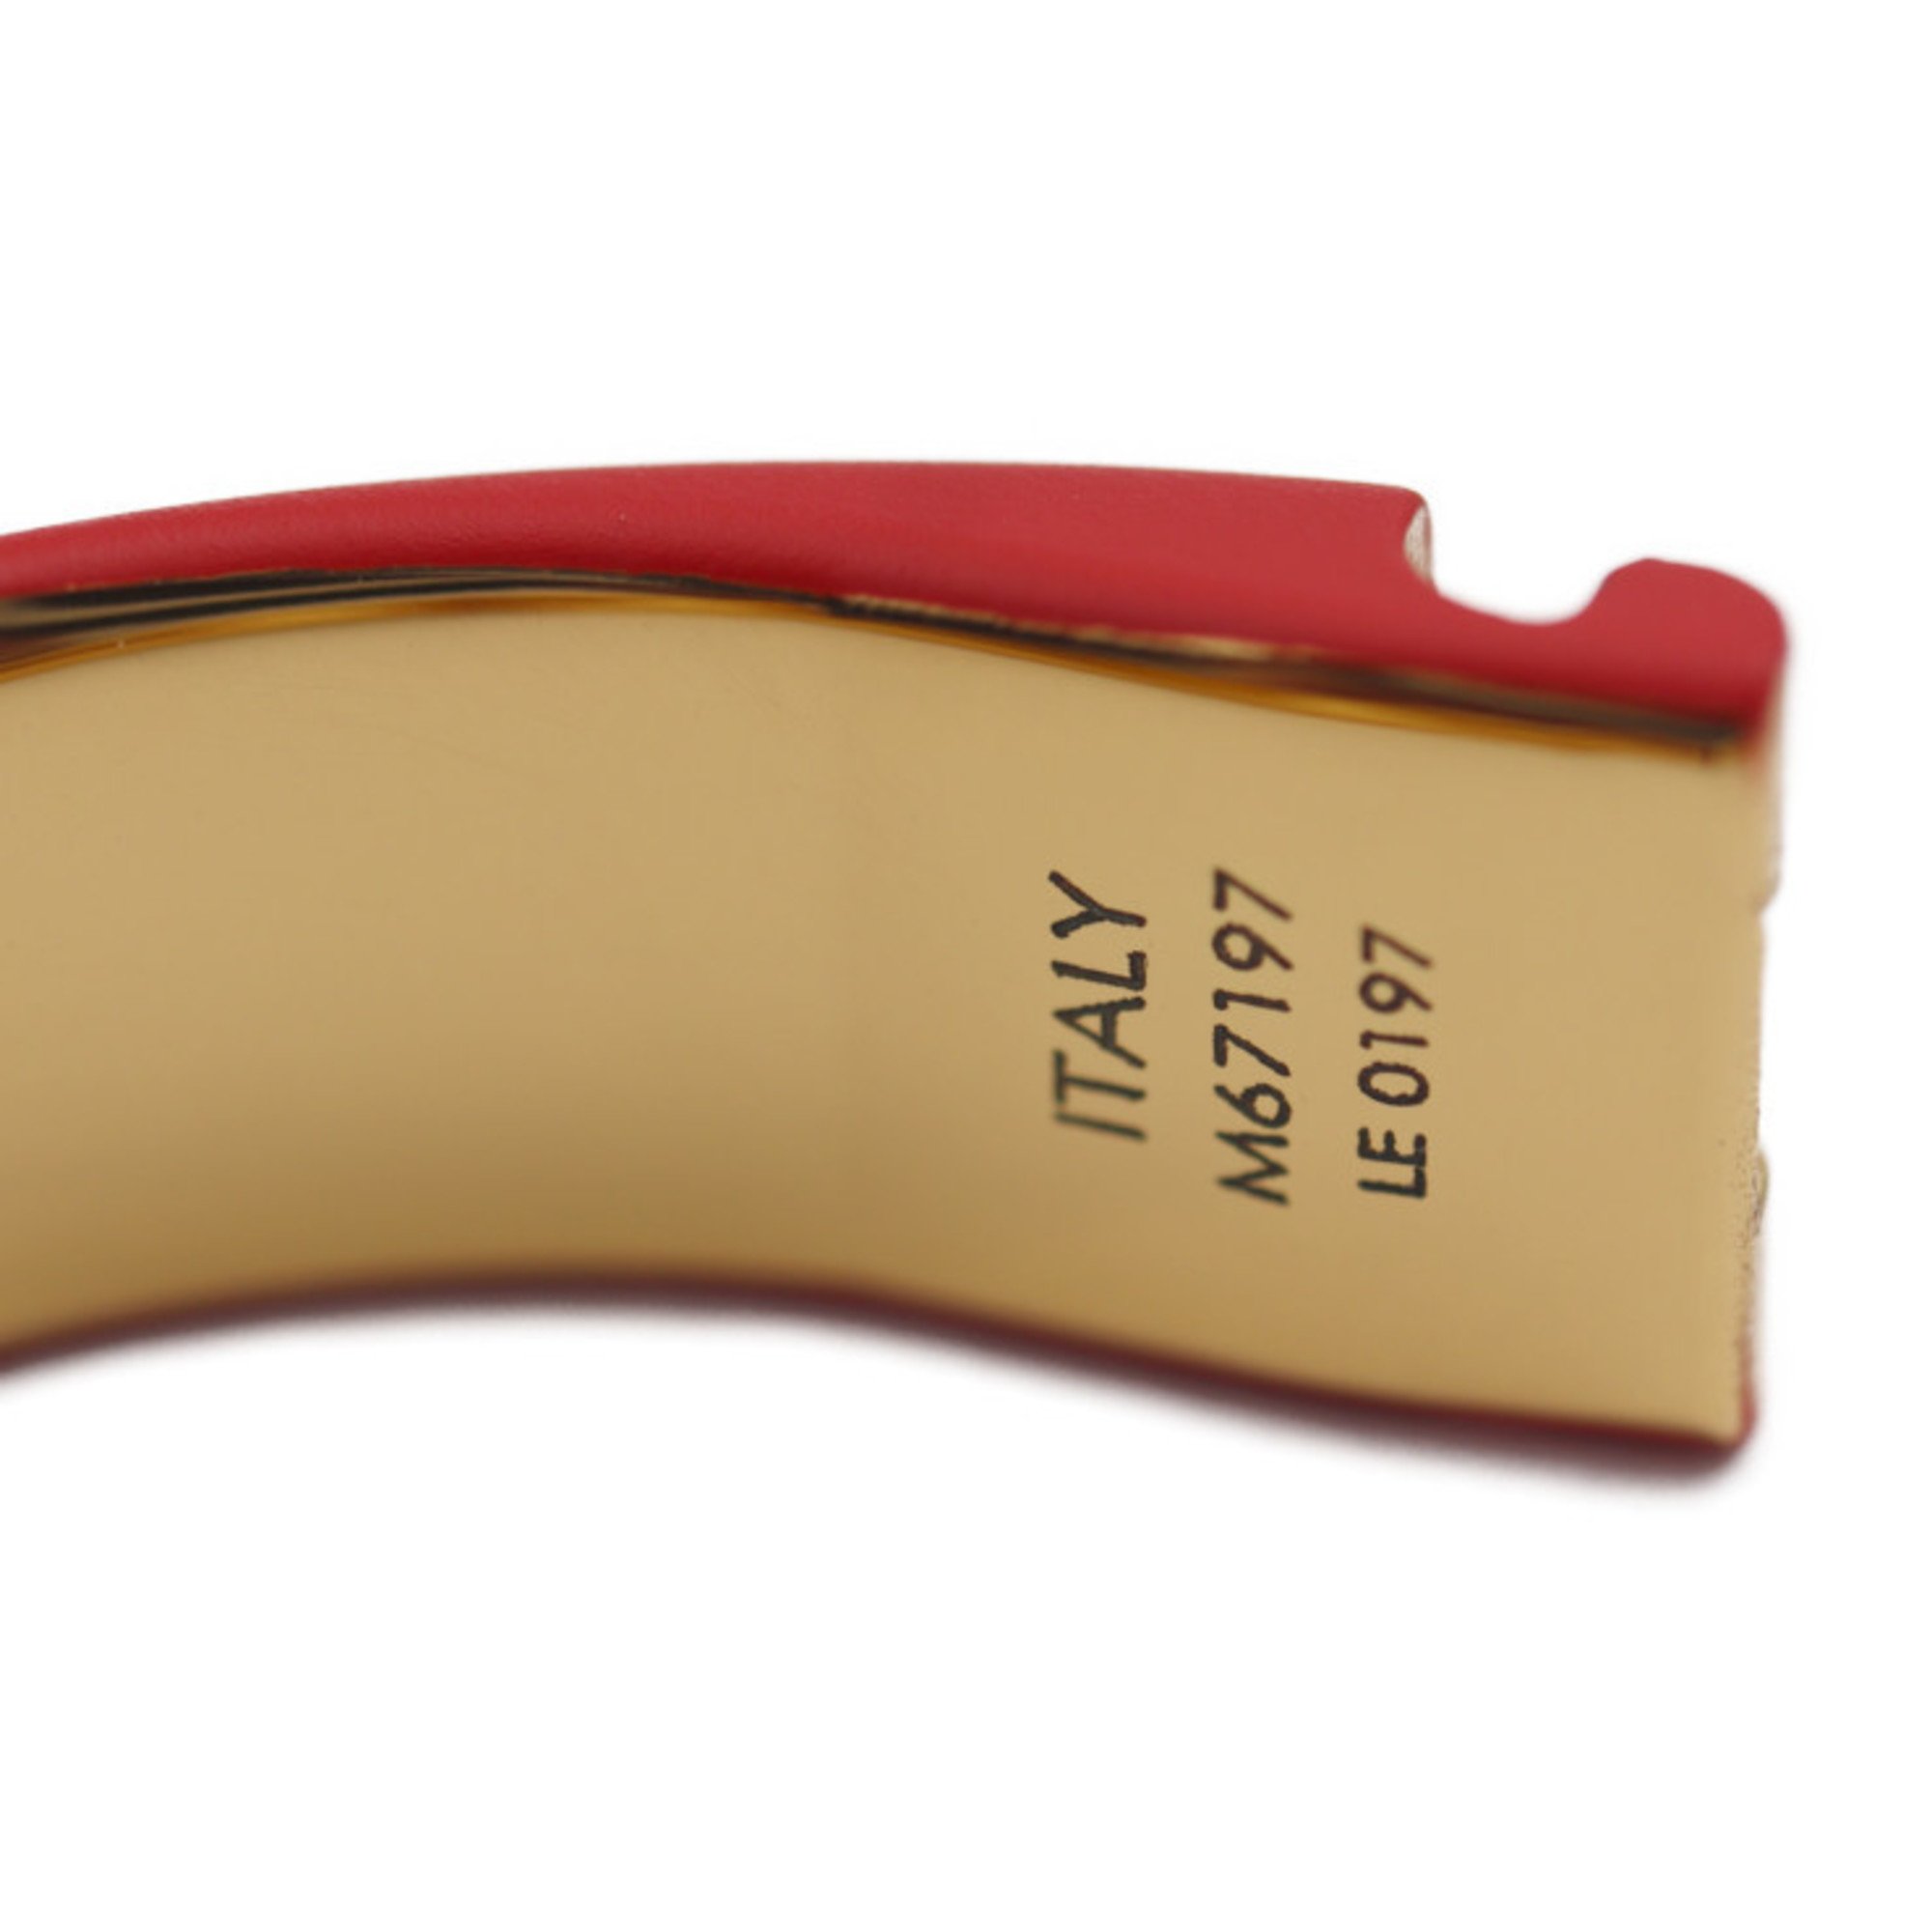 LOUIS VUITTON Louis Vuitton cuff nanogram bracelet M67197 notation size S metal red gold fittings